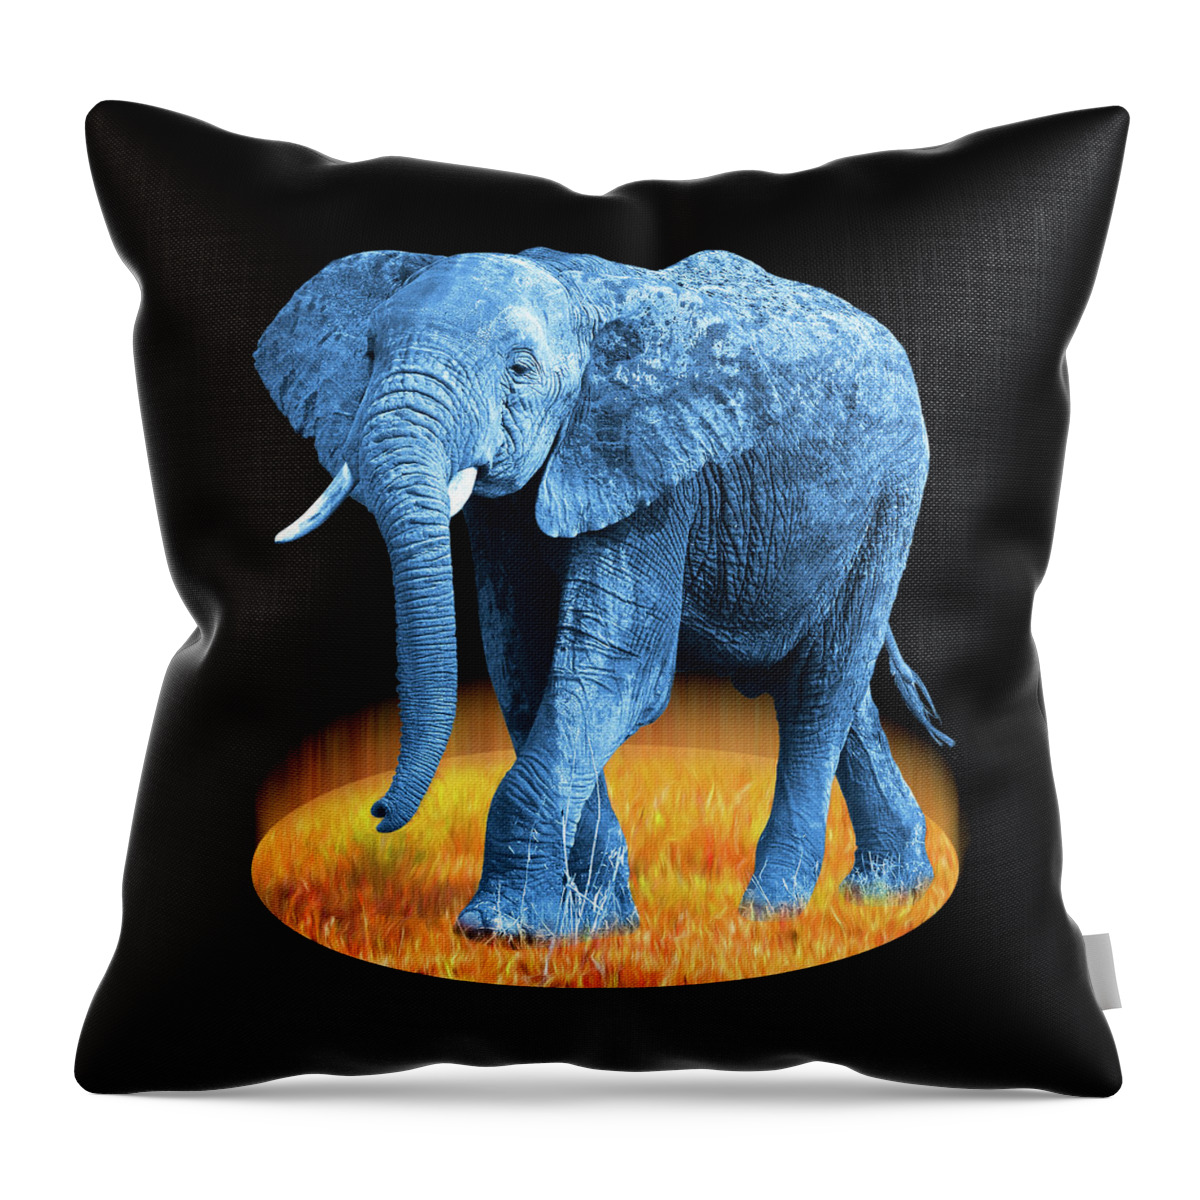 Elephant Throw Pillow featuring the photograph Elephant - World On Fire by Gill Billington